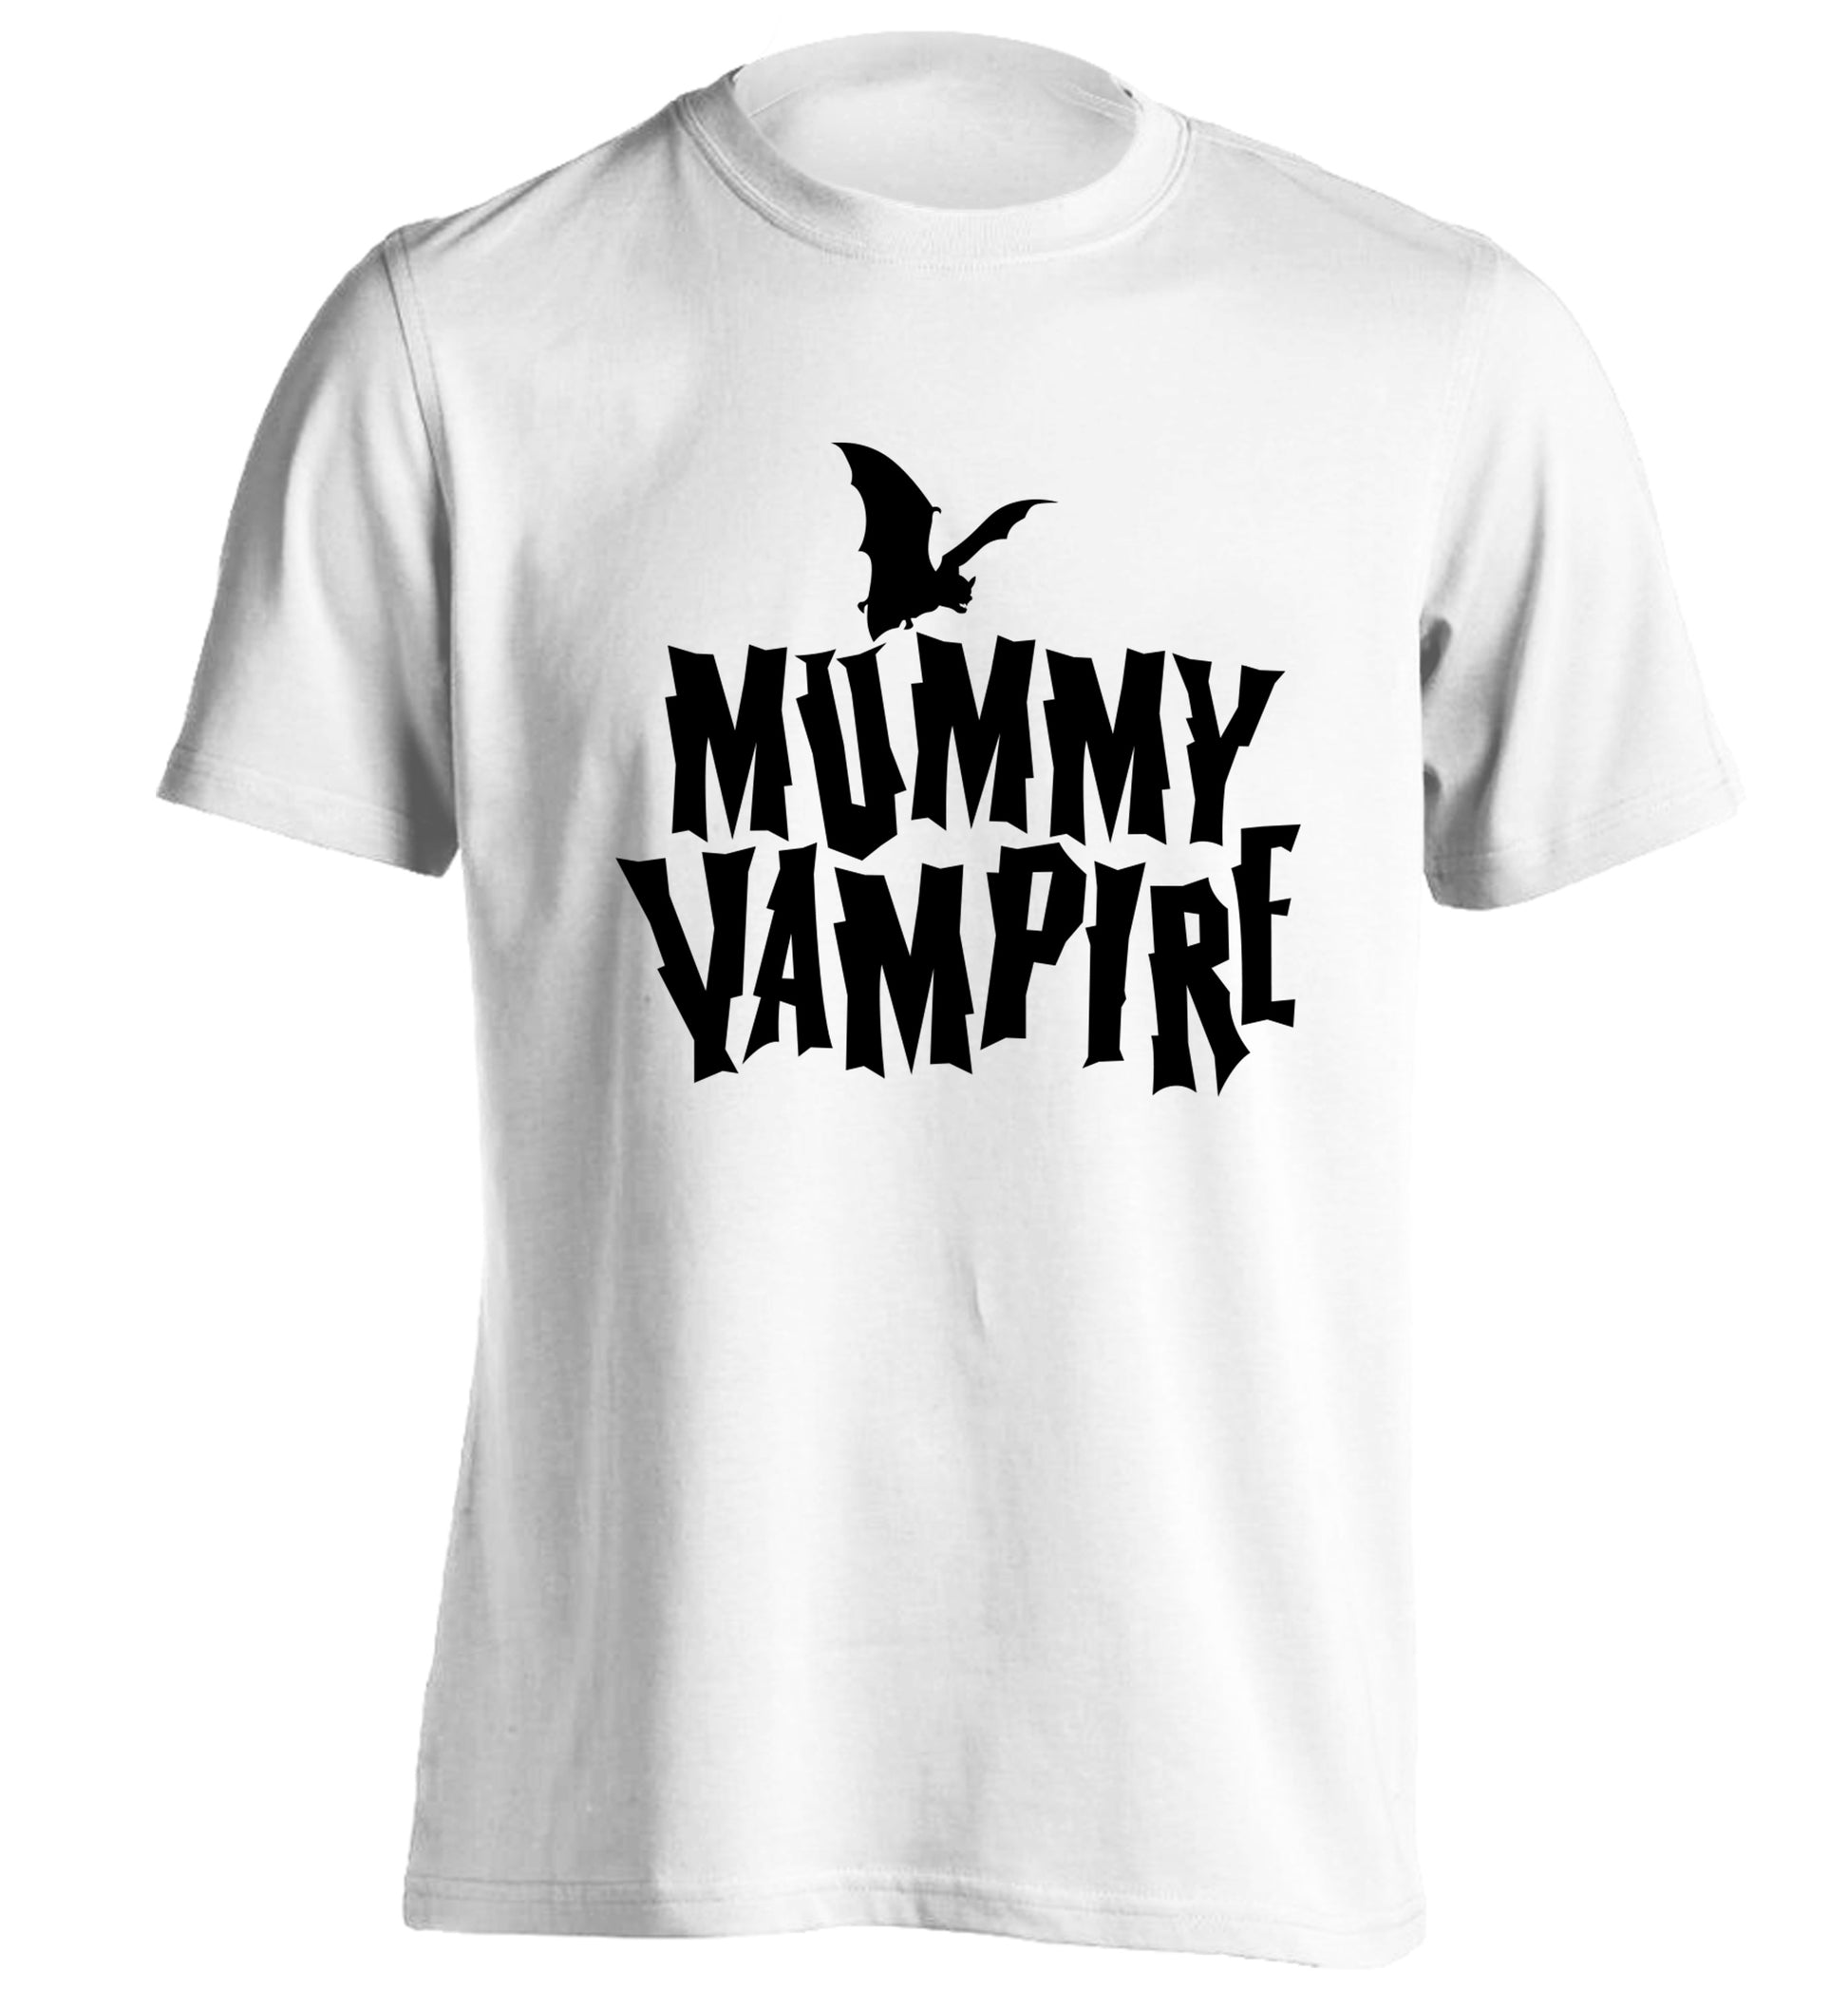 Mummy vampire adults unisex white Tshirt 2XL